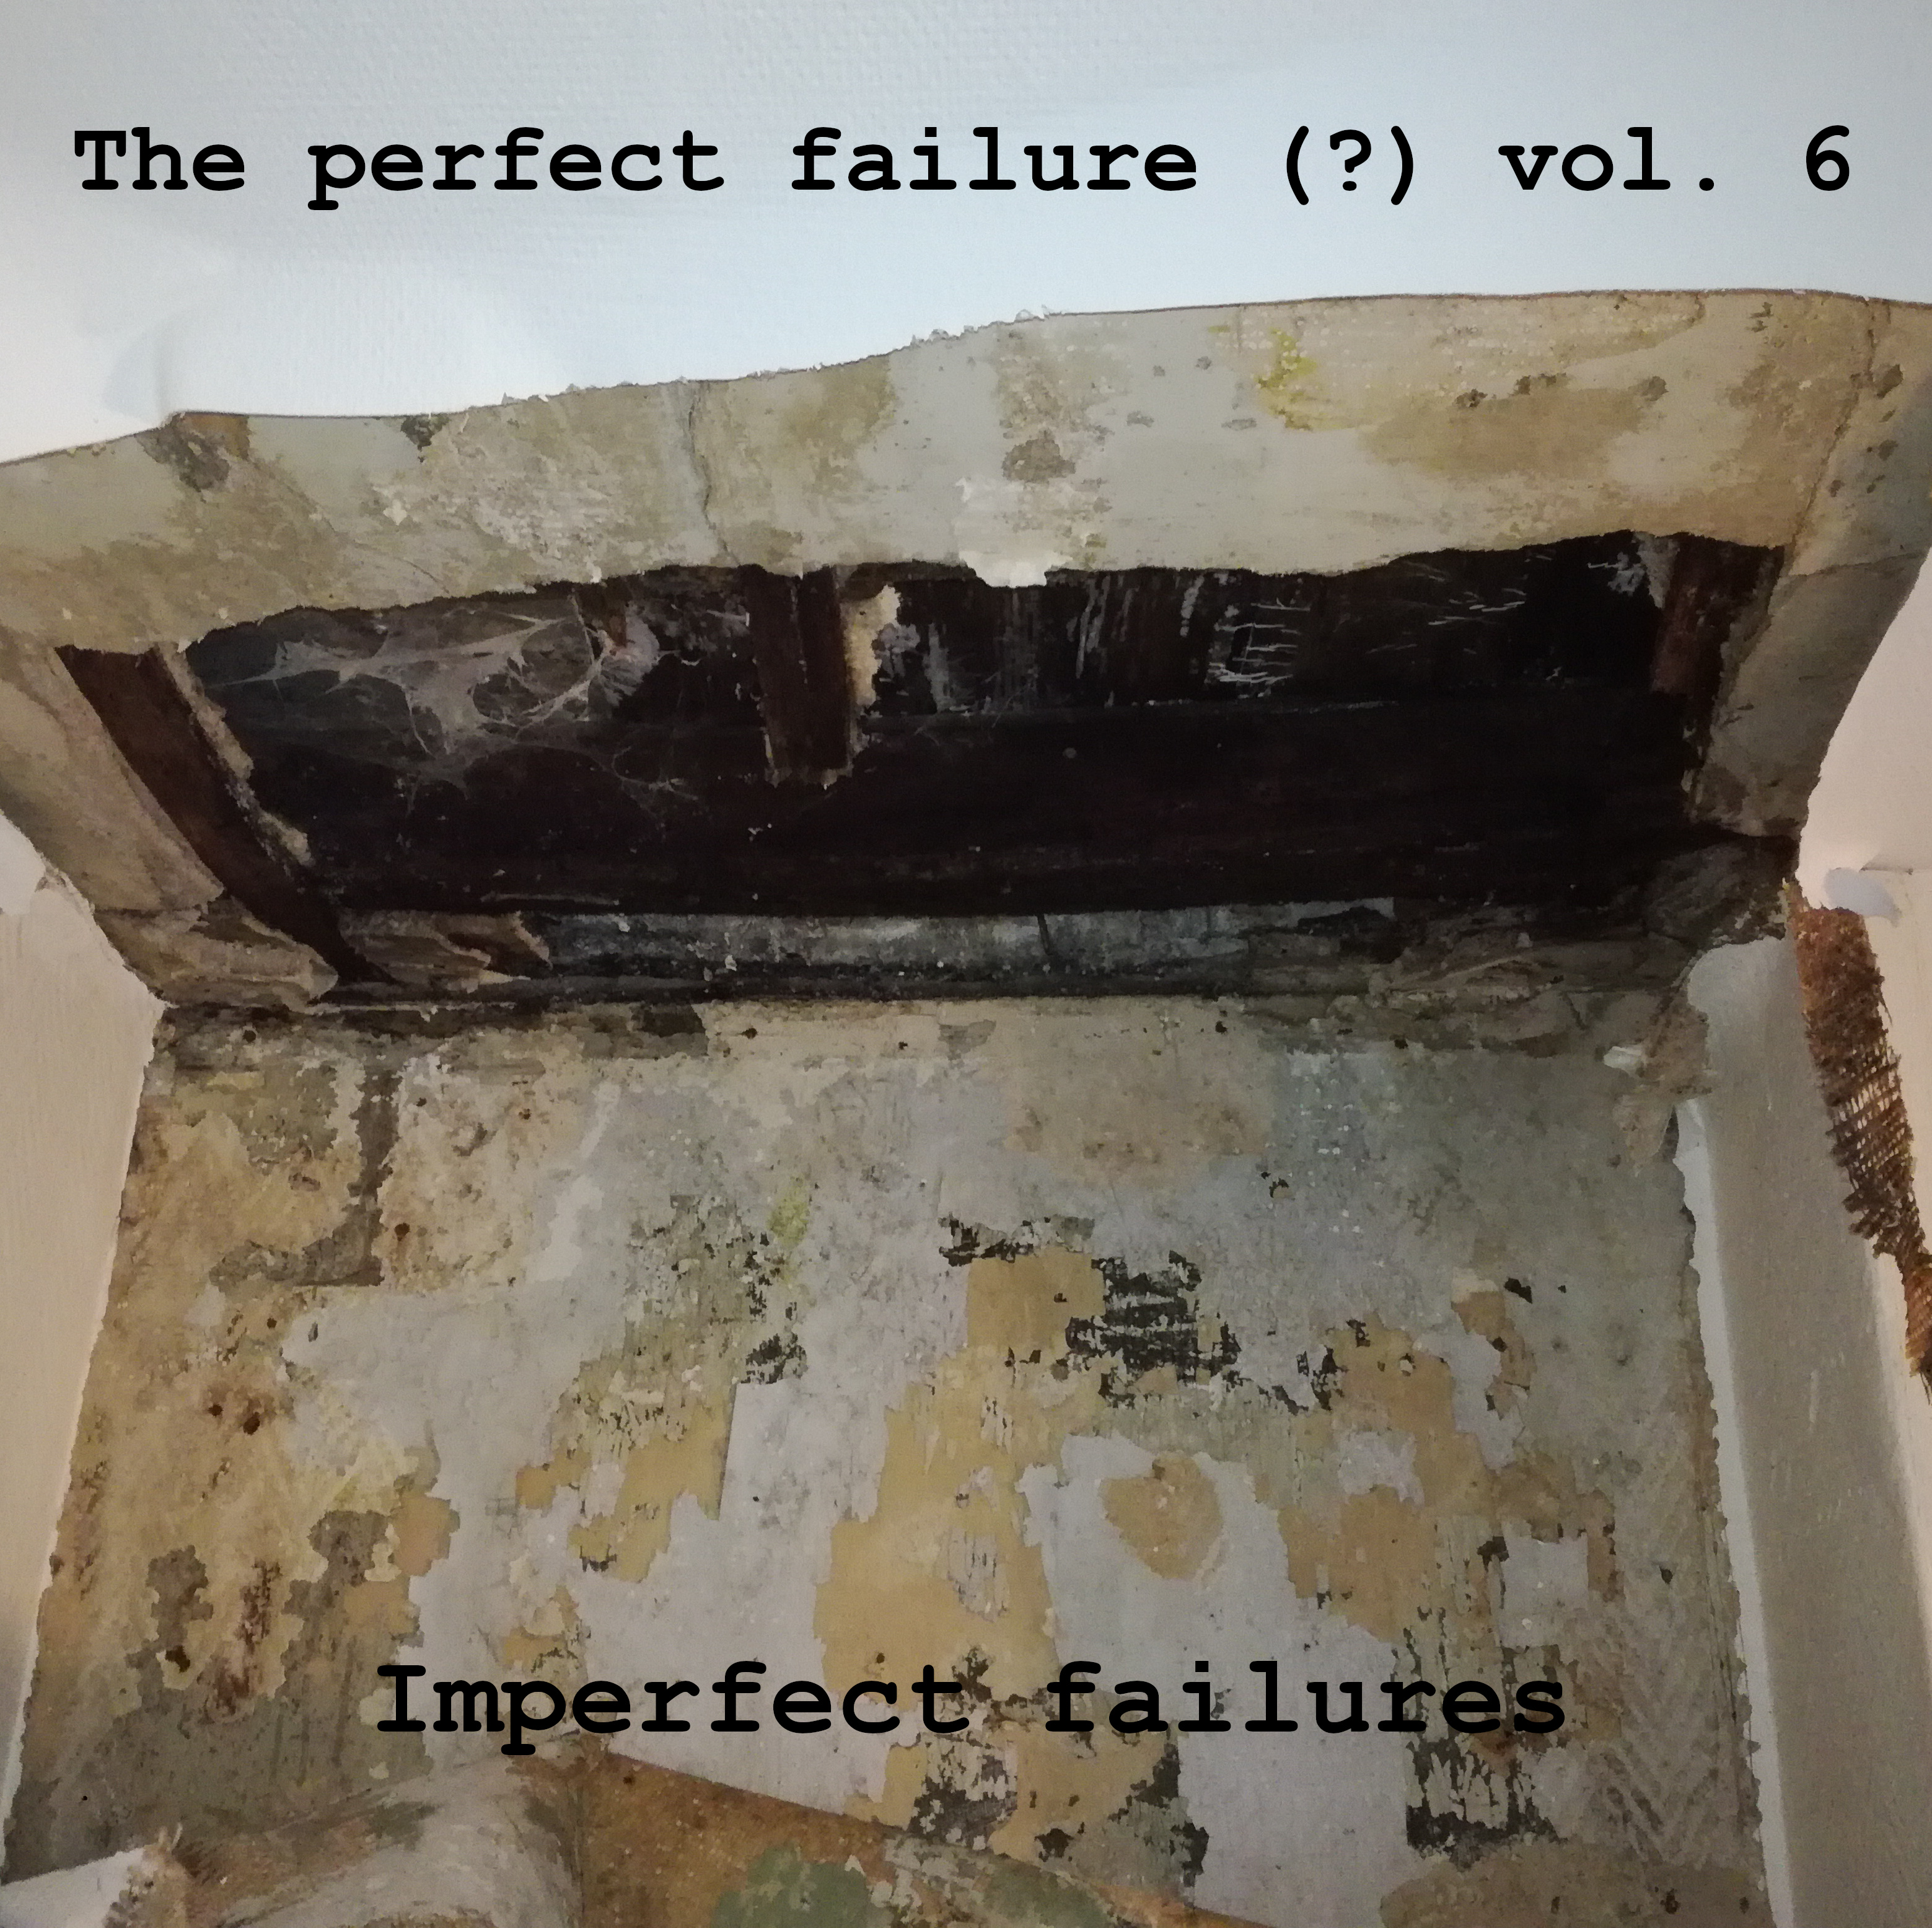 The perfect failure (?) – The perfect failure (?) vol. 6 : Imperfect failures